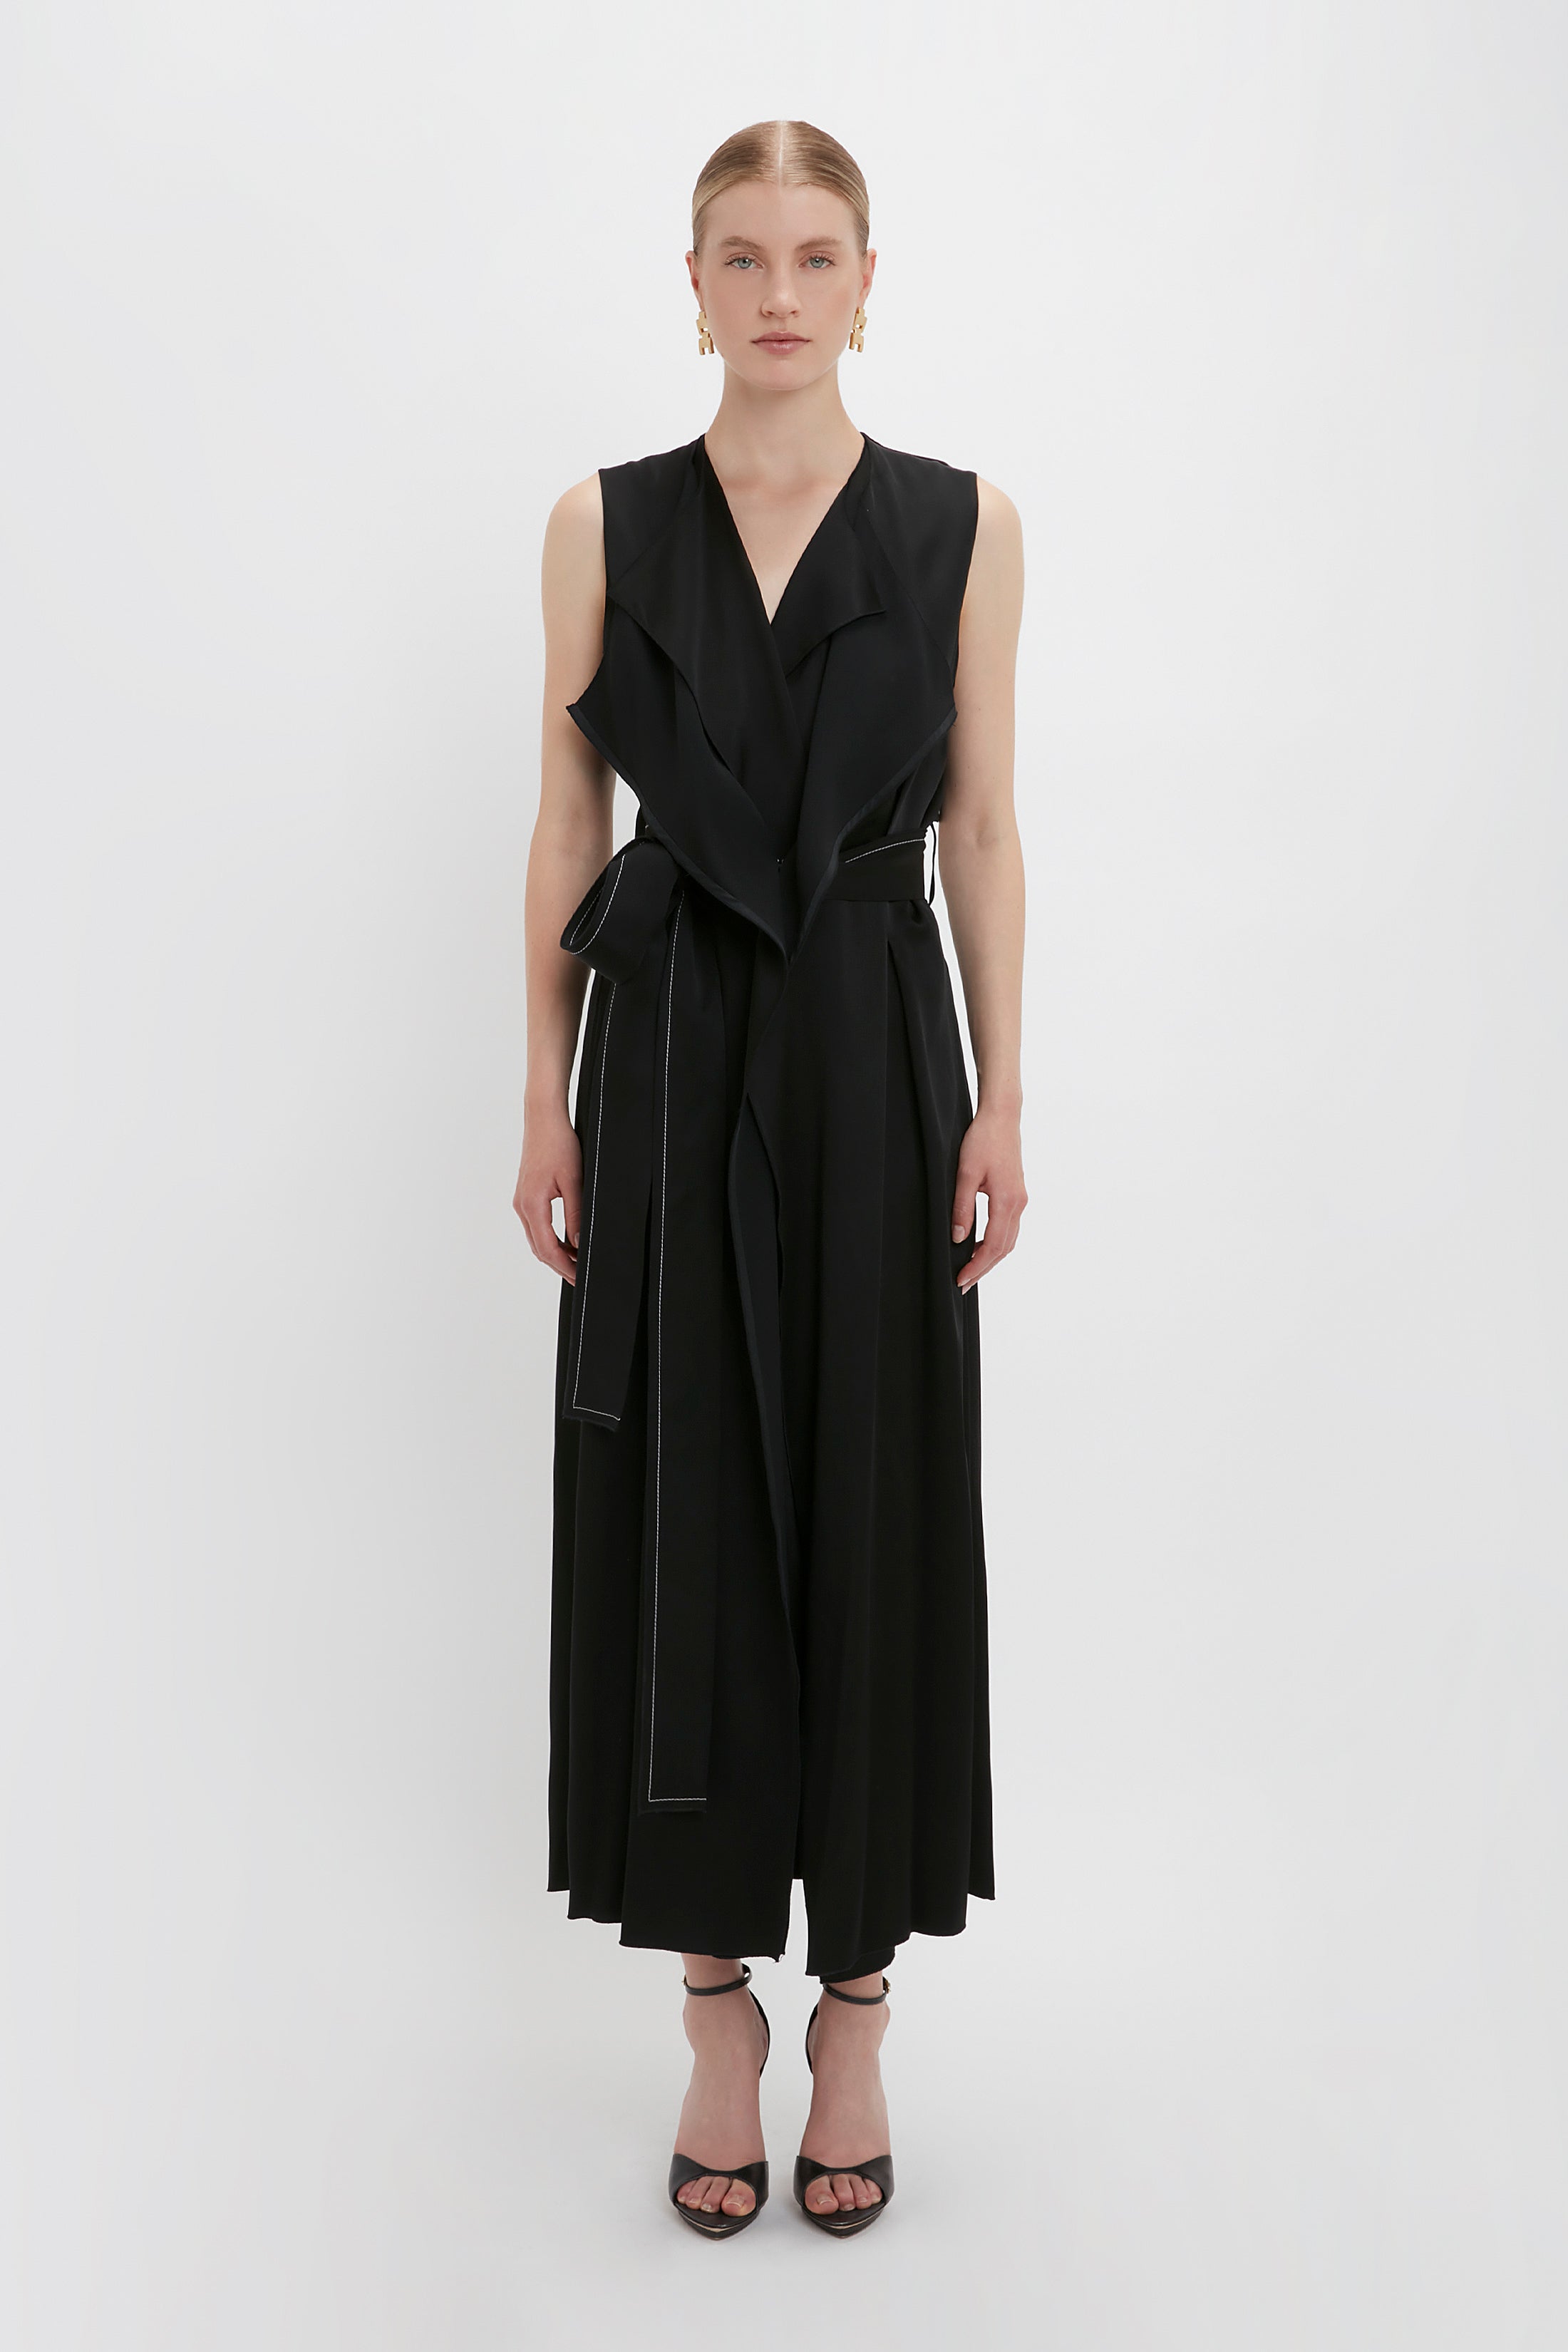 Trench Dress In Black – Victoria Beckham